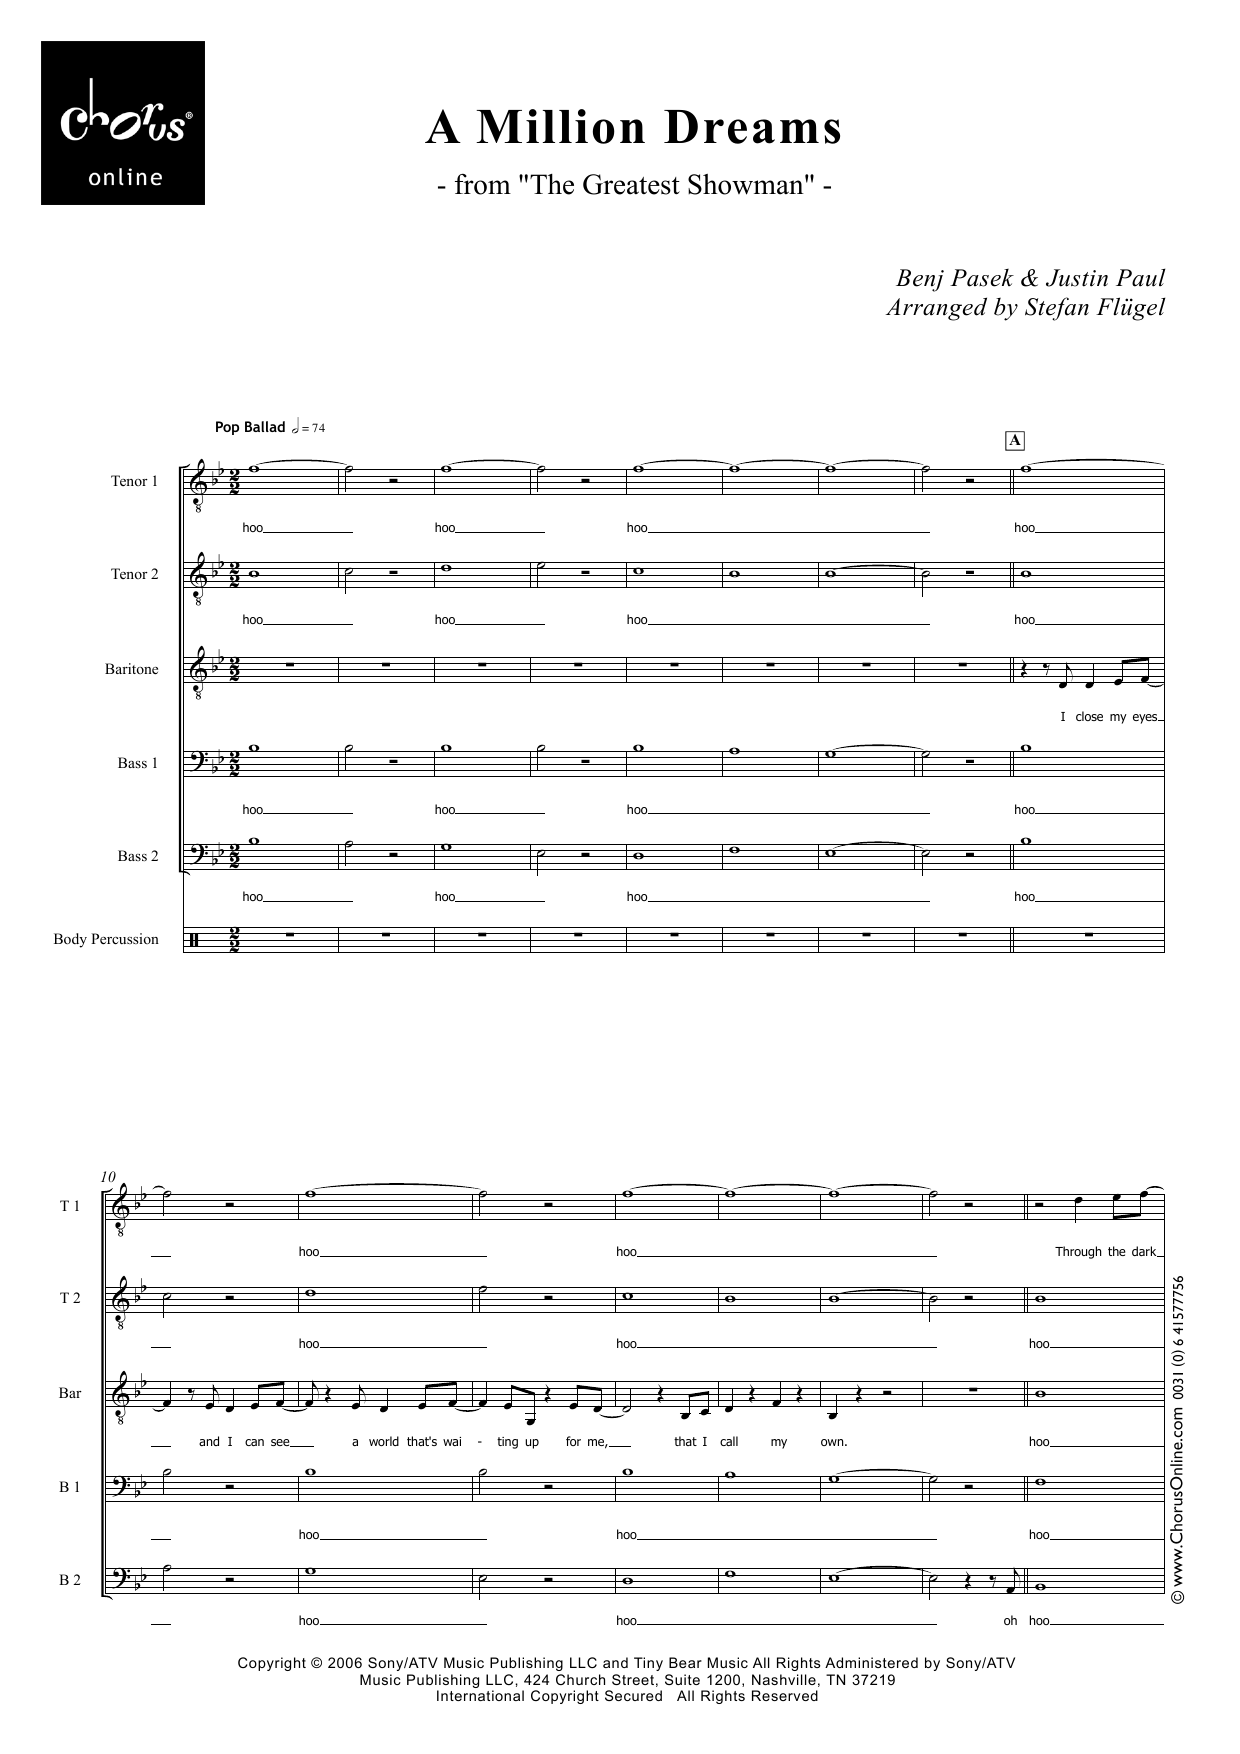 Pasek & Paul A Million Dreams (arr. Stefan Flügel) sheet music notes printable PDF score